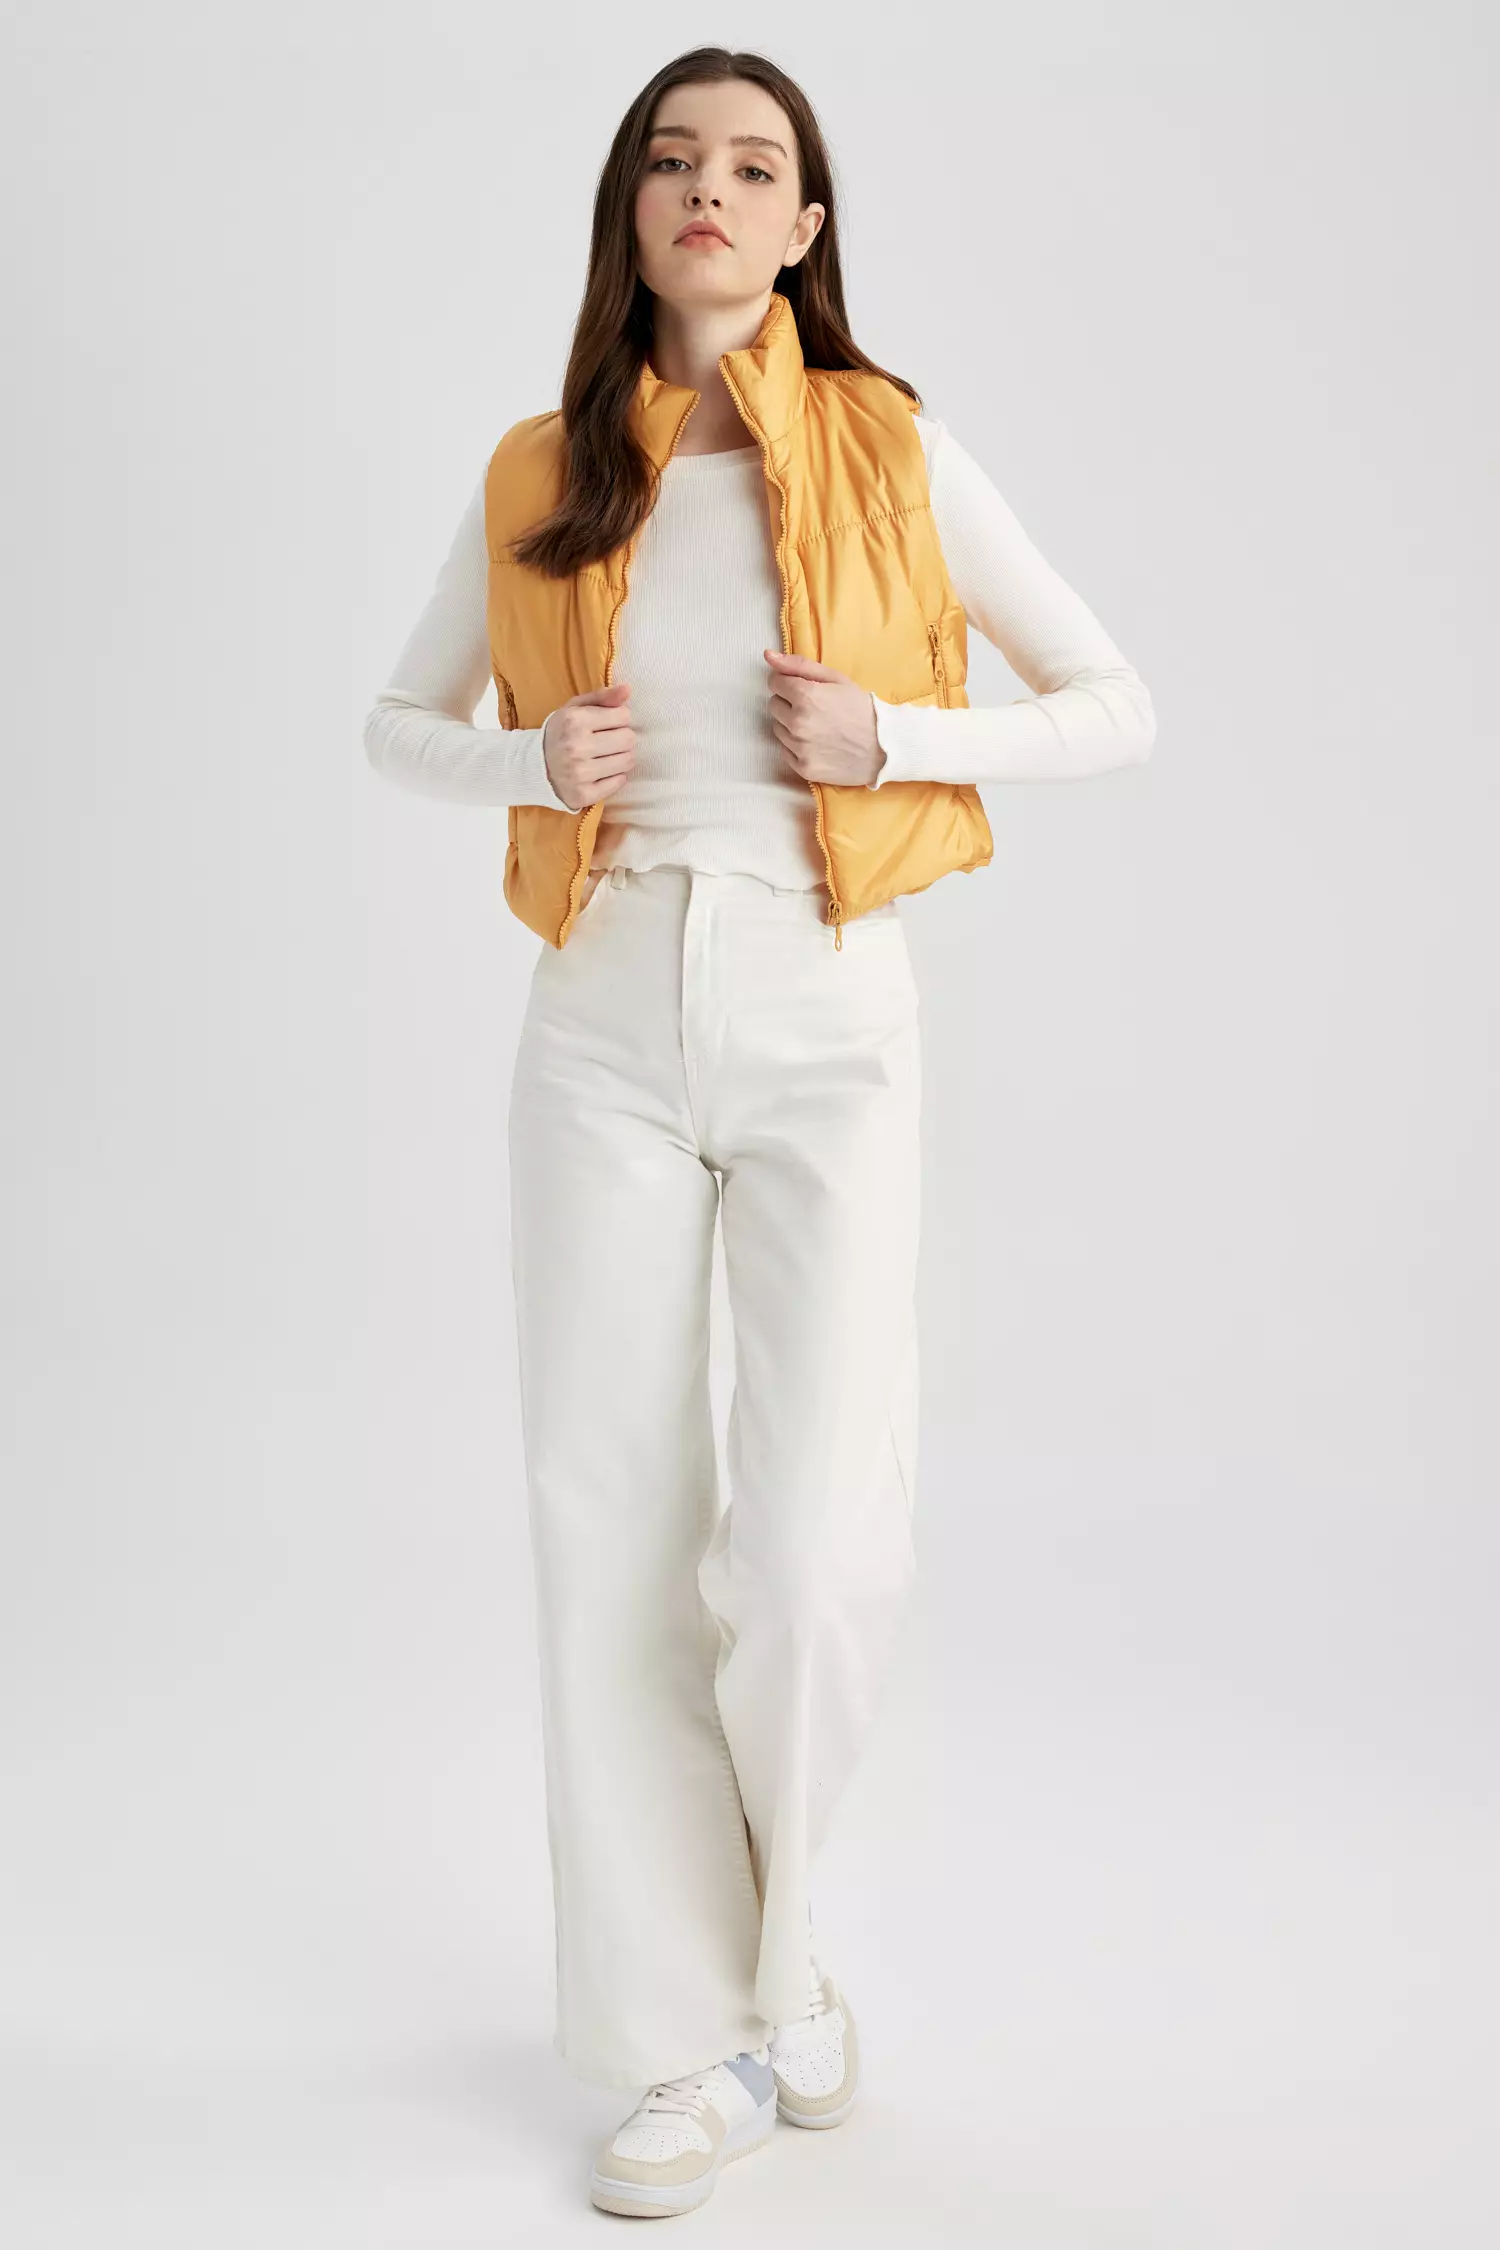 Buy DeFacto Slim Fit Linen Blend Vest 2024 Online